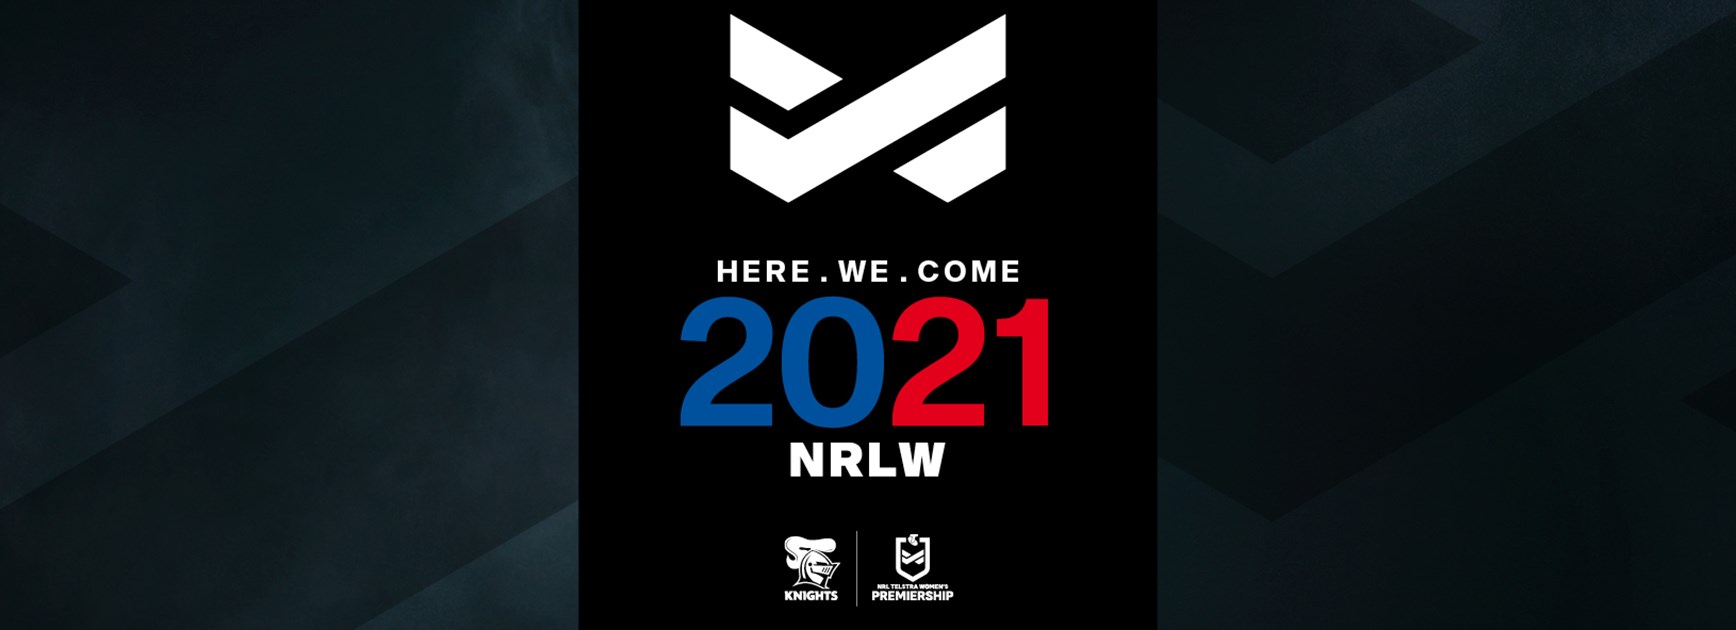 A New Dawn: Knights to enter NRLW in 2021